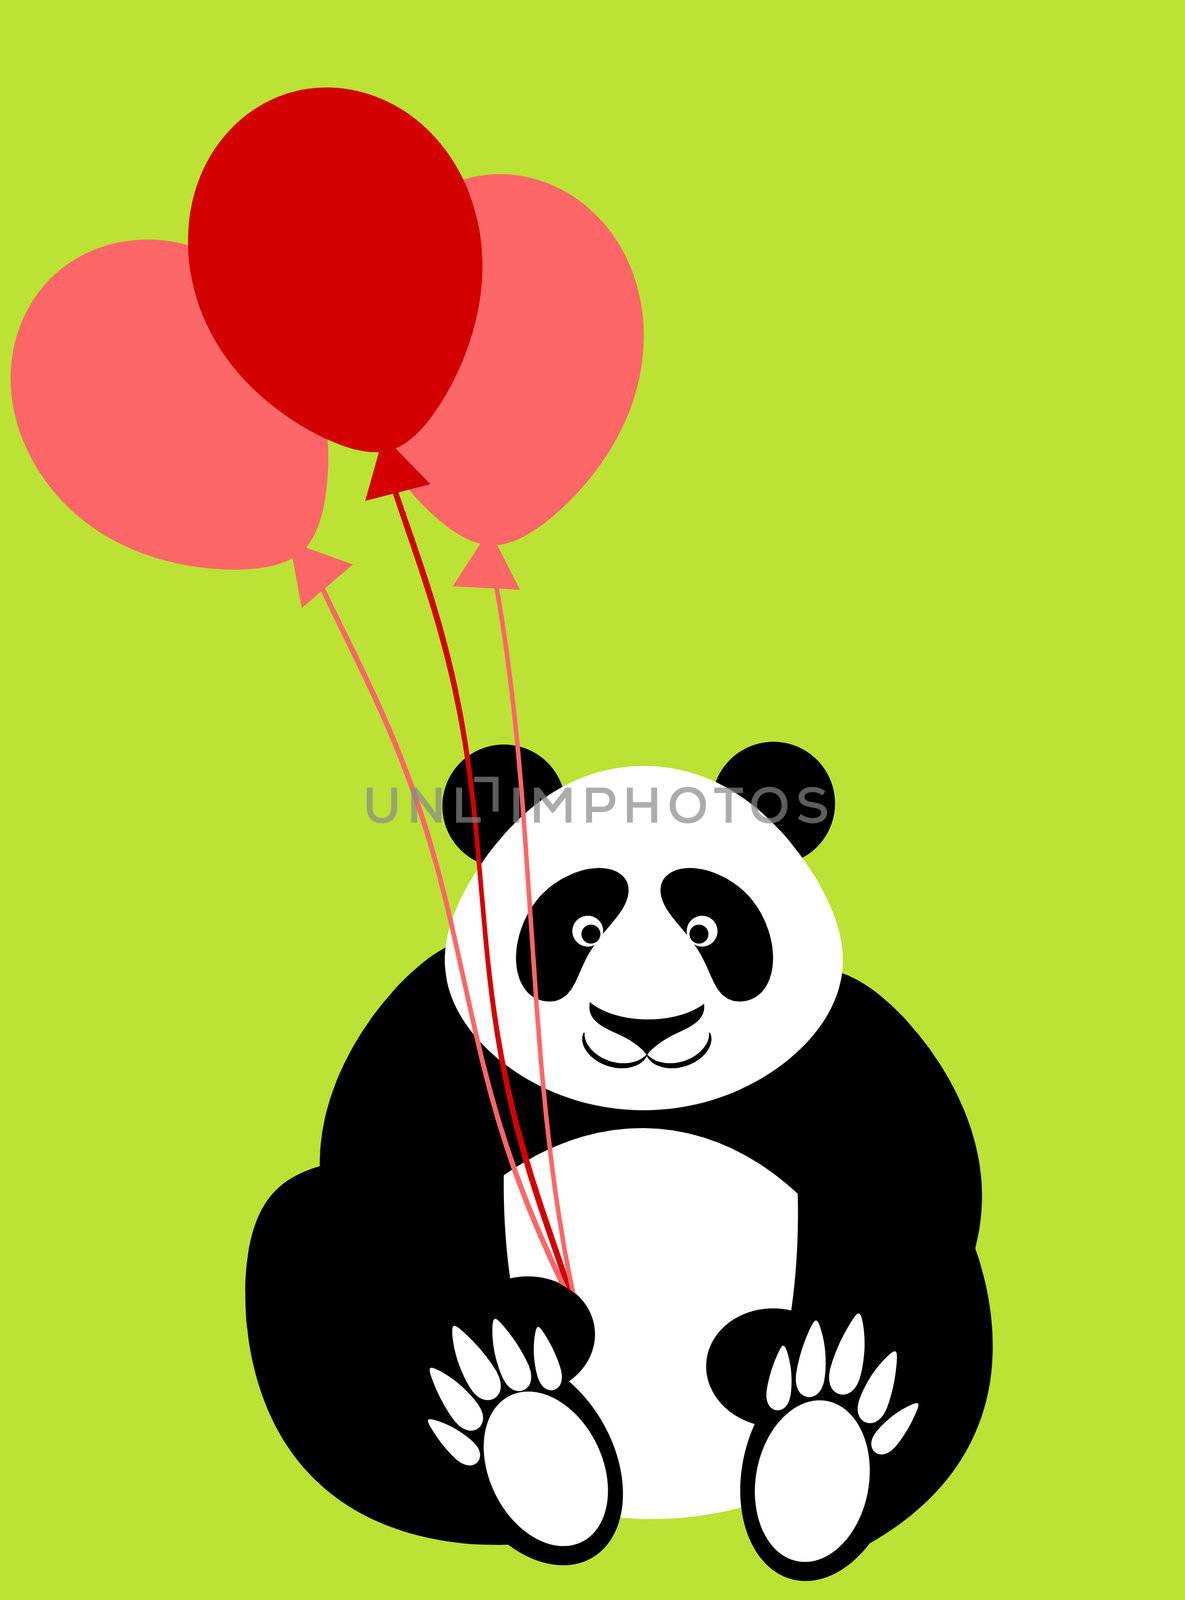 Happy Valentines Day Panda Bear Holding Balloons Illustration